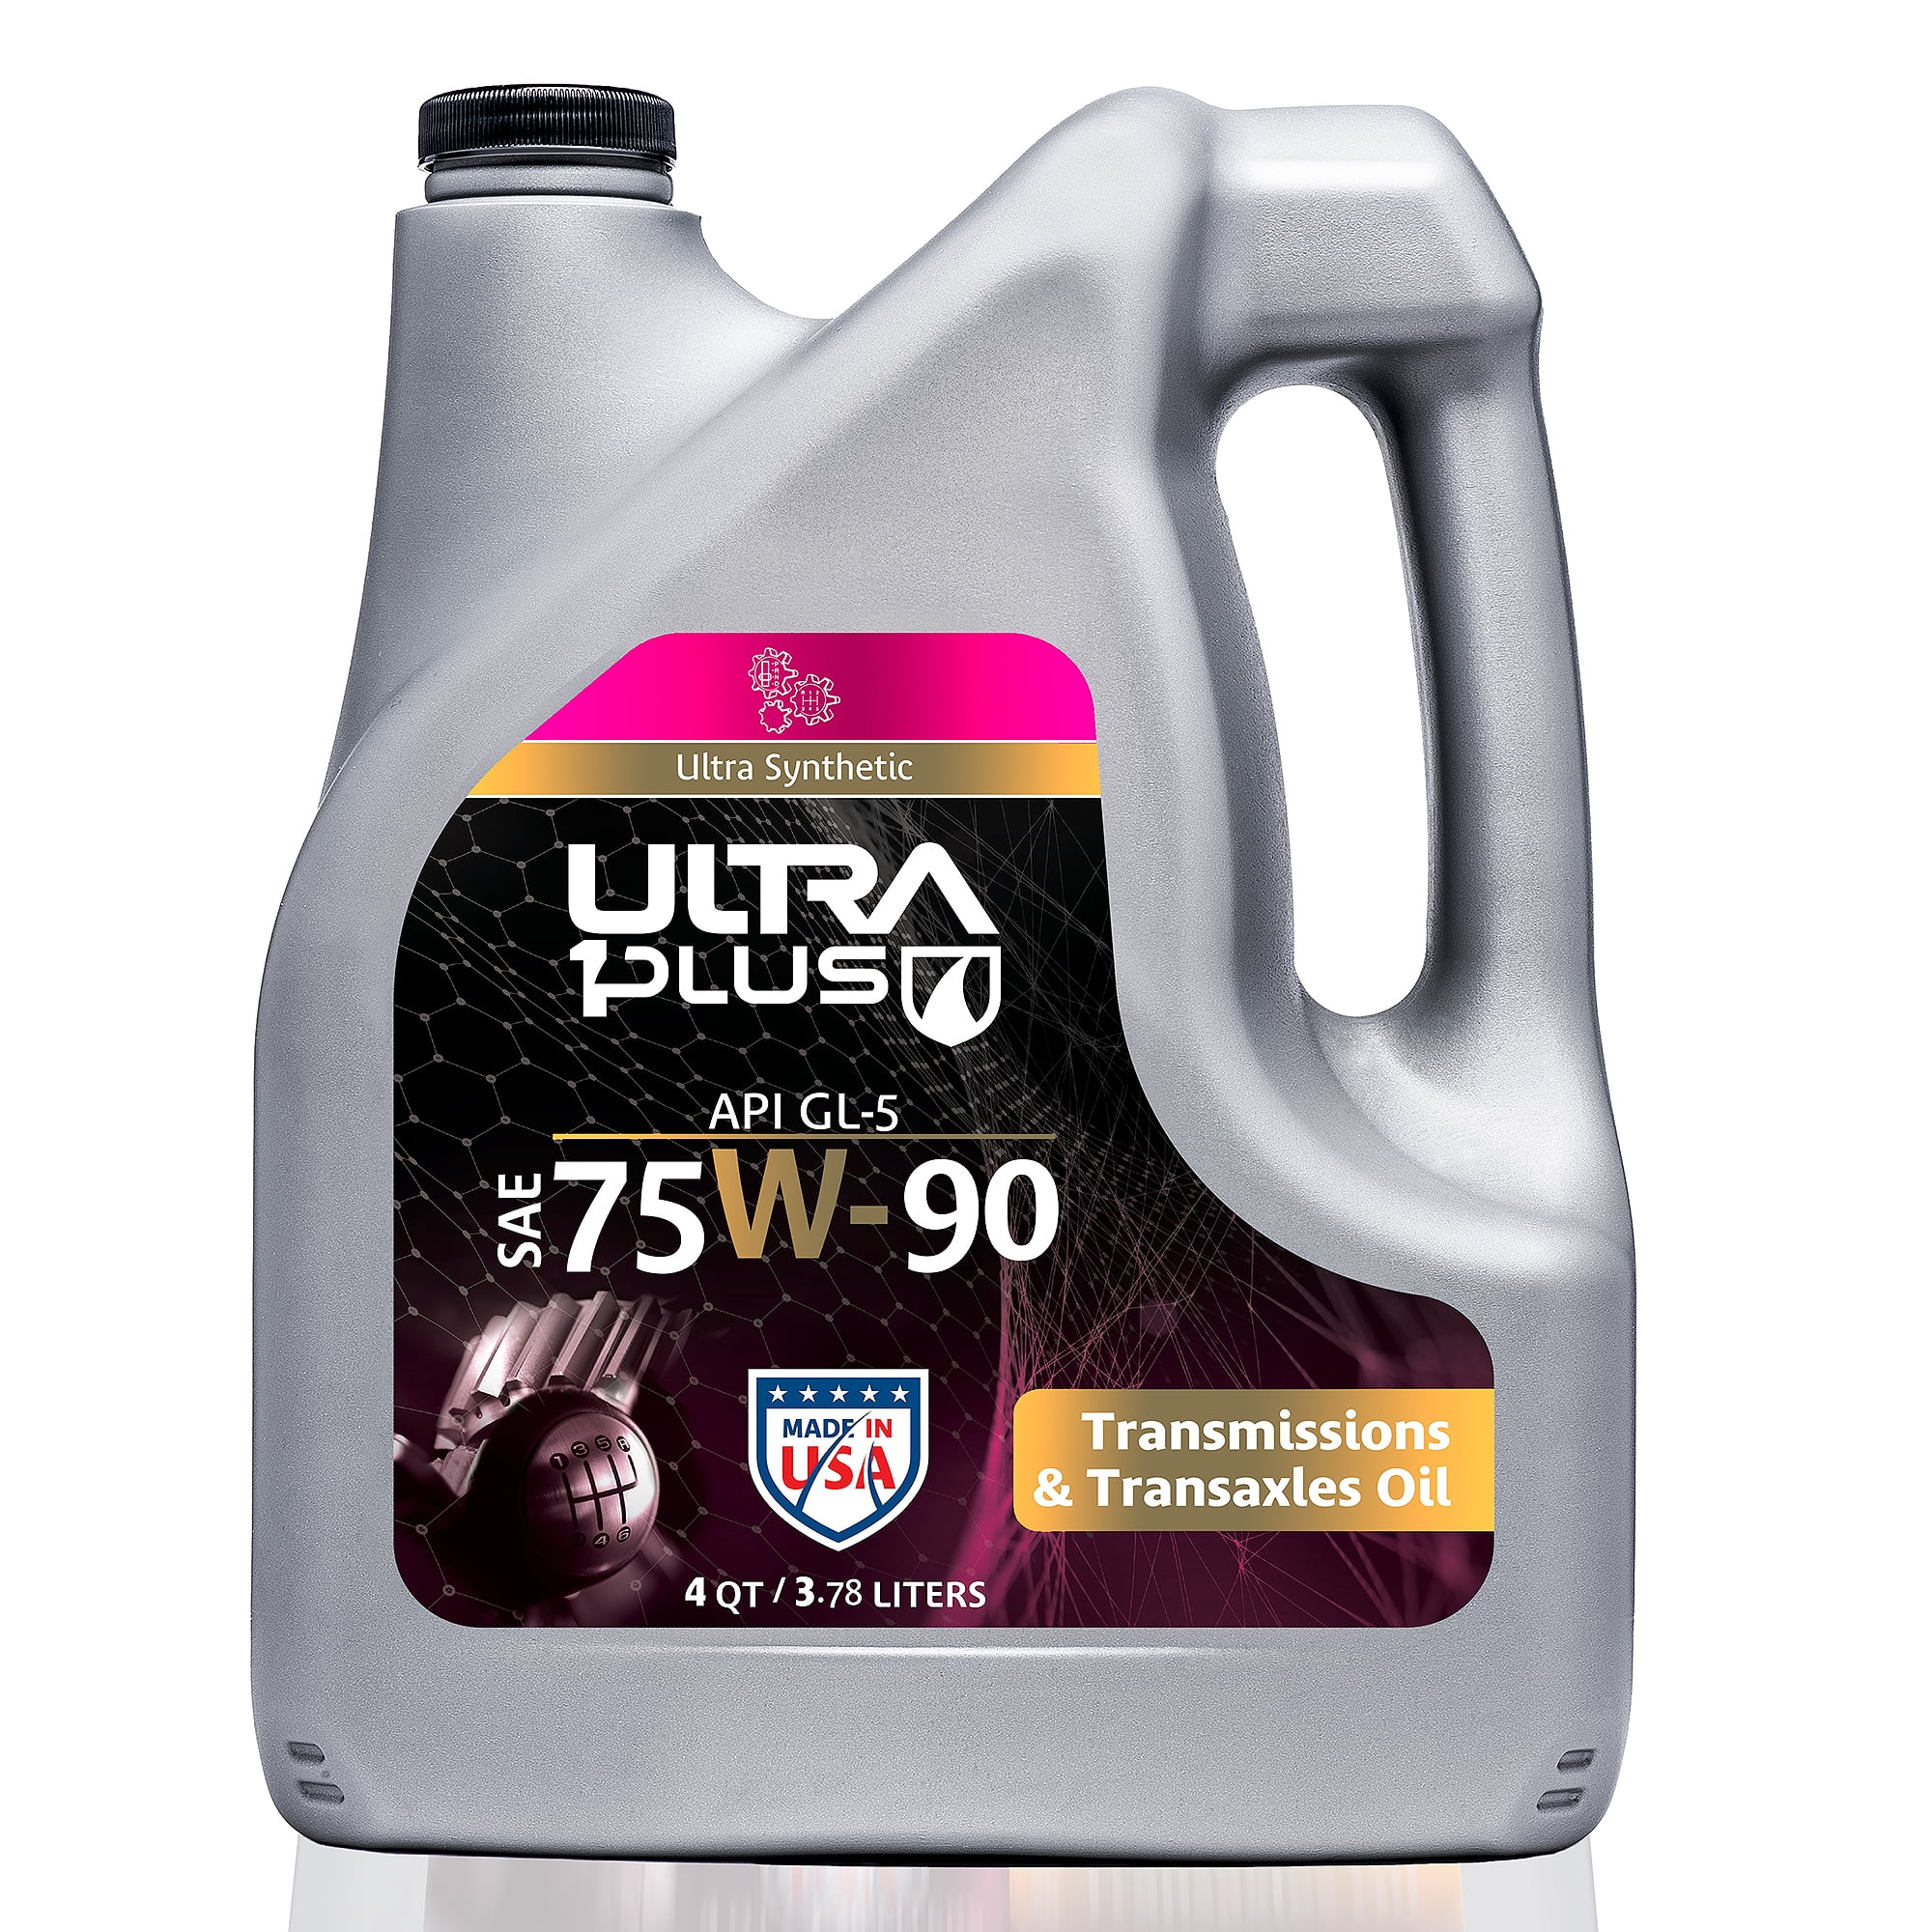 Ultra1Plus™ SAE 75W-90 Synthetic Gear Oil API GL-5